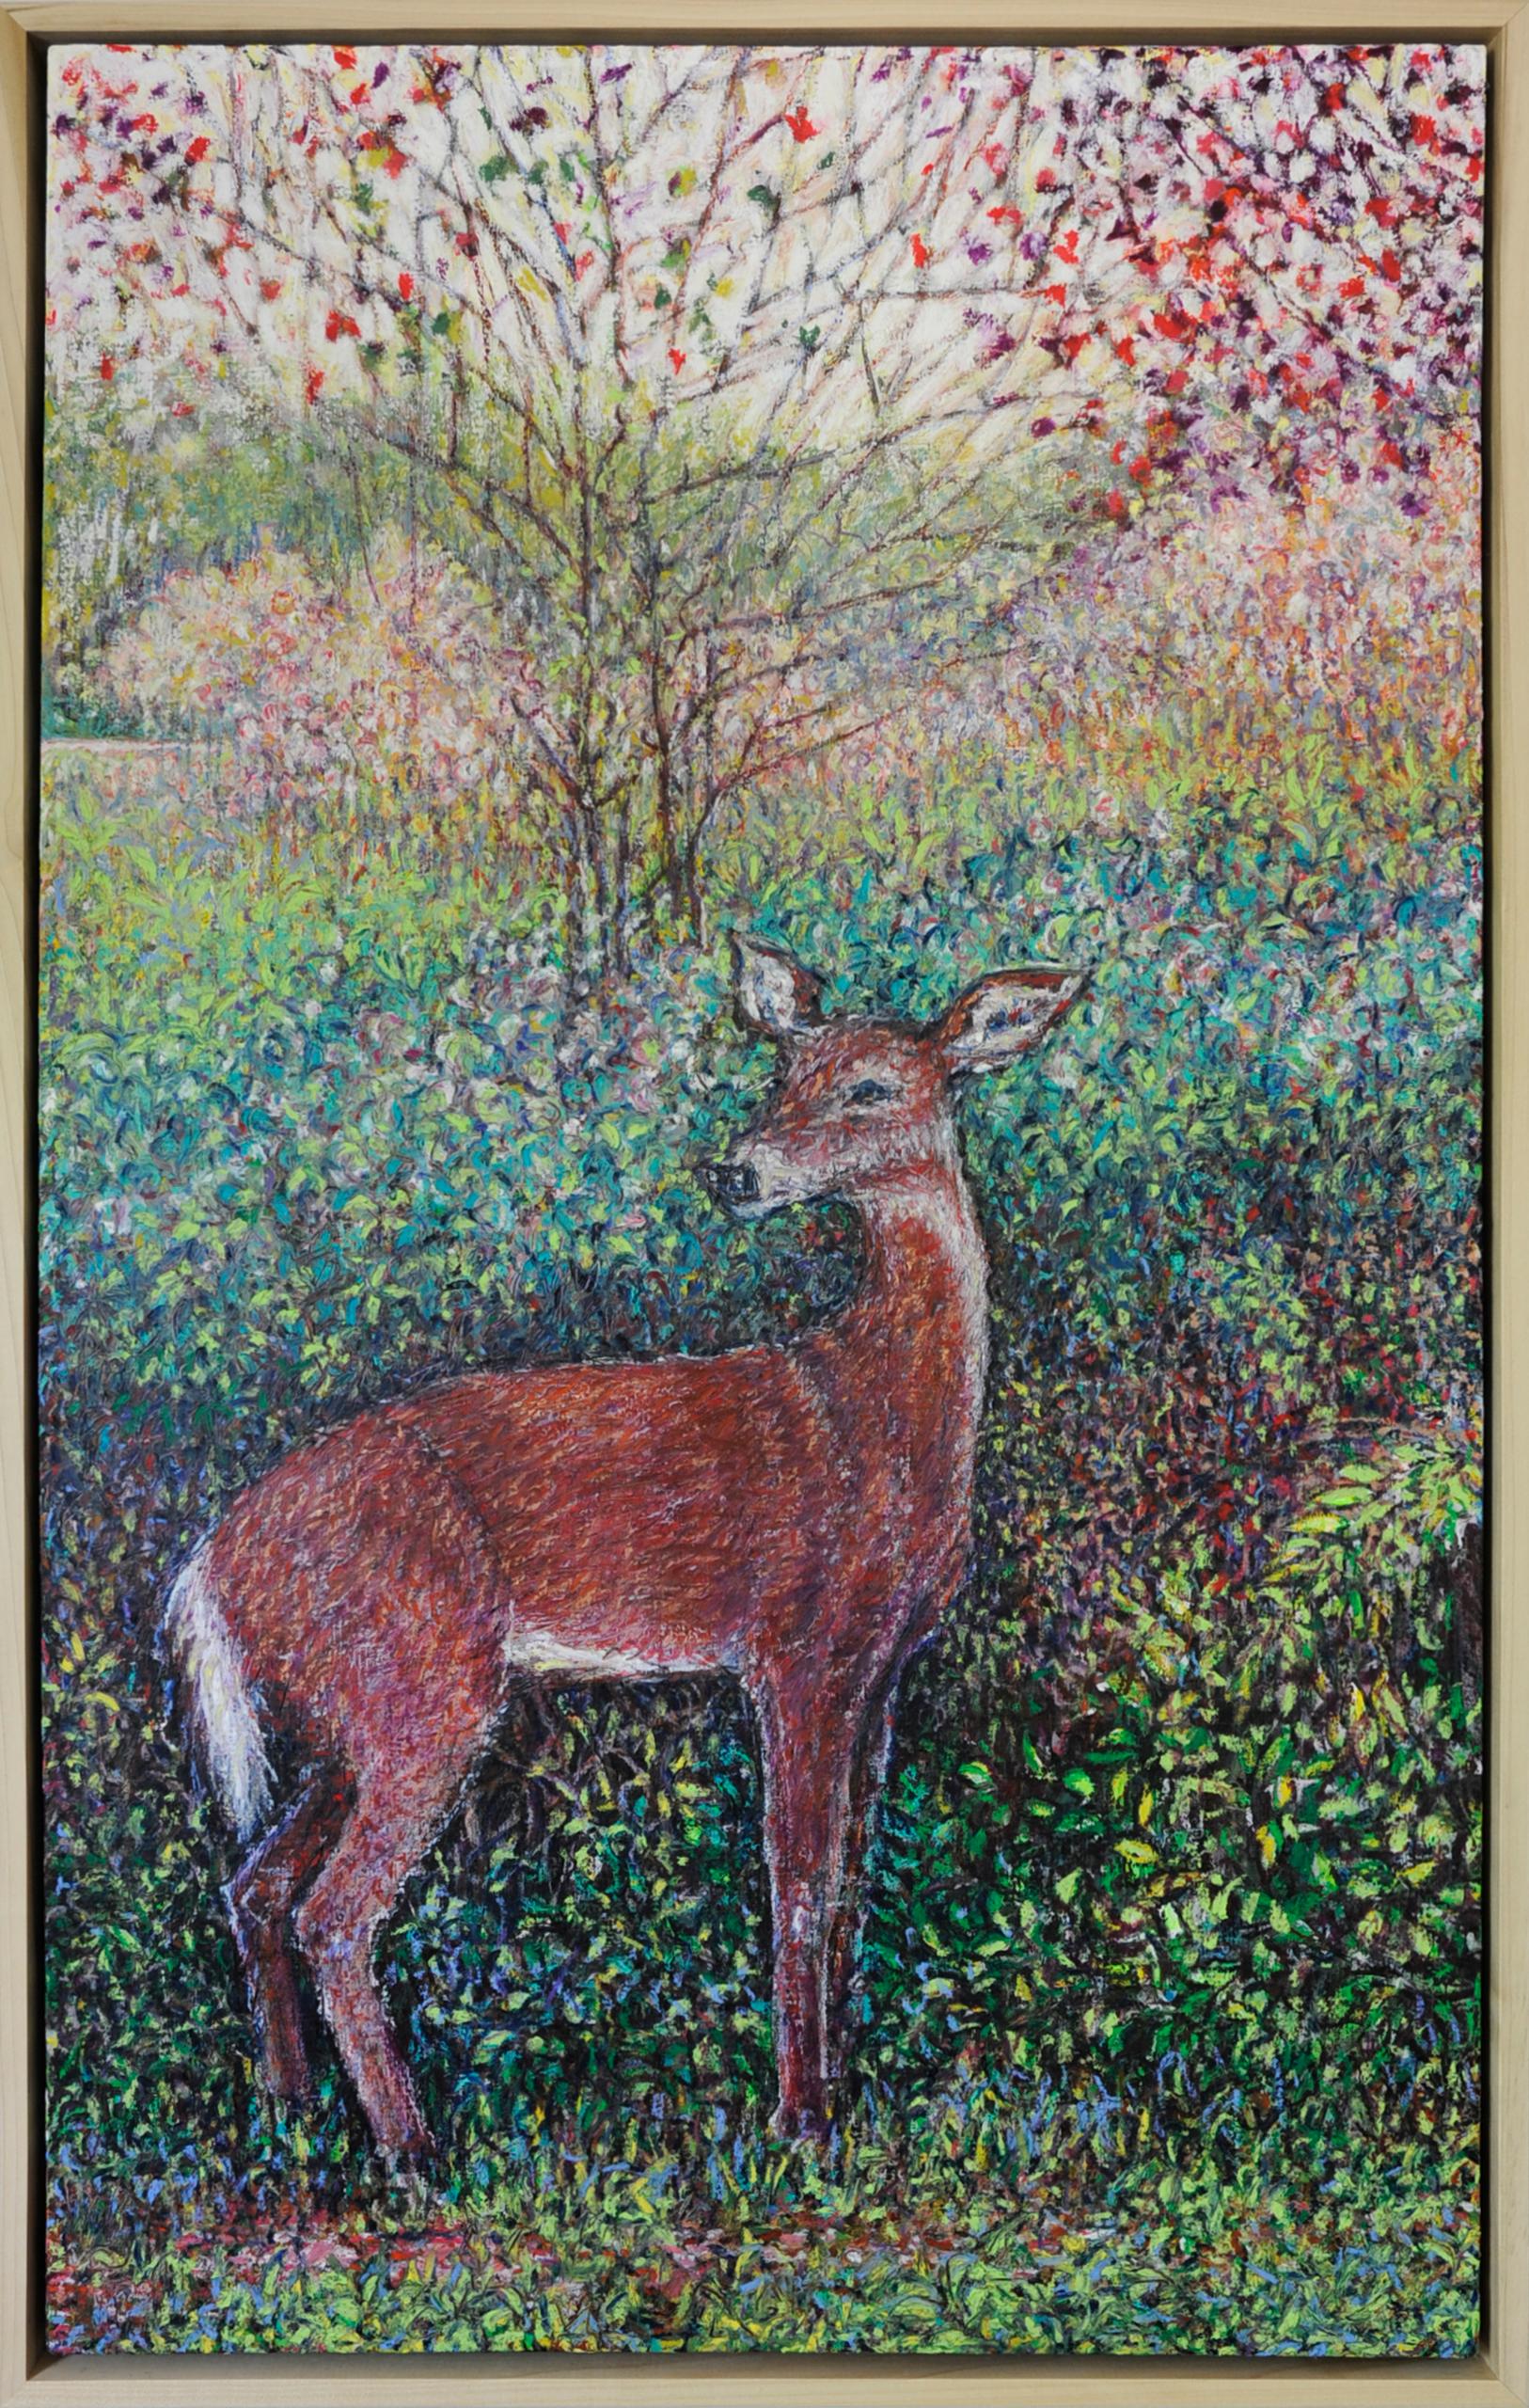 Erin Dixon Landscape Art - "Walk" - oil pastel drawing, figurative, nature, deer, optical mixing, colorful